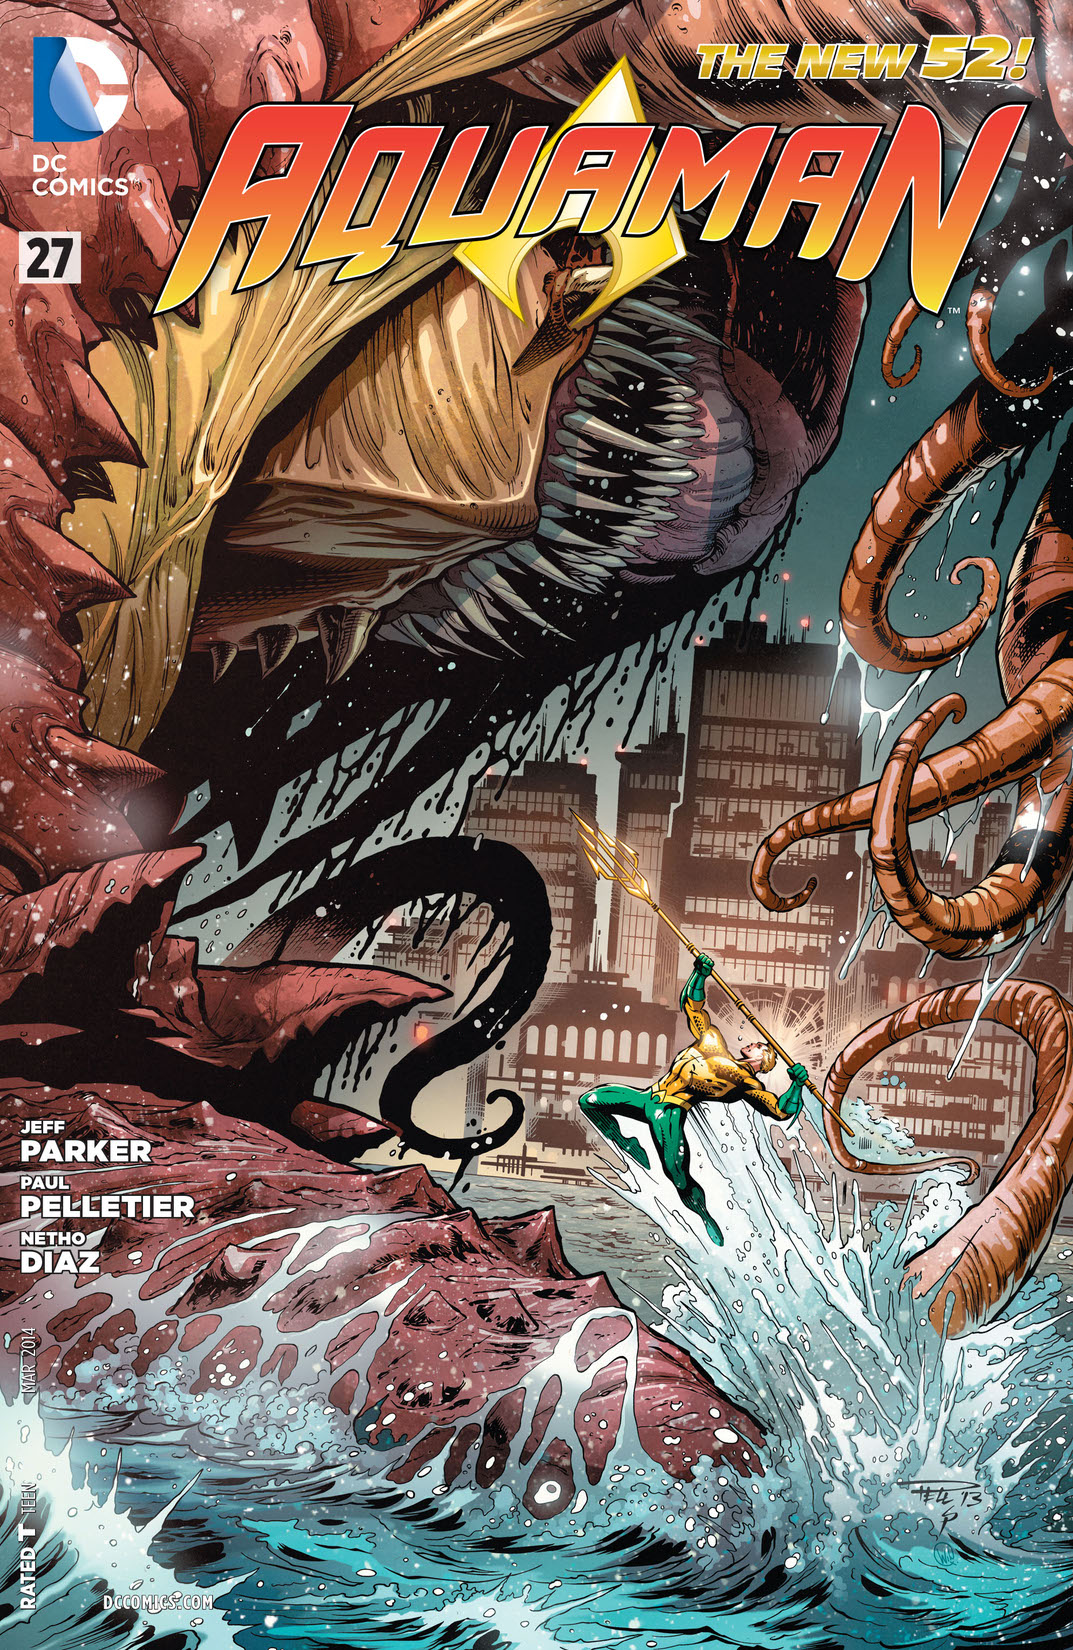 Aquaman (2011-) #27 preview images